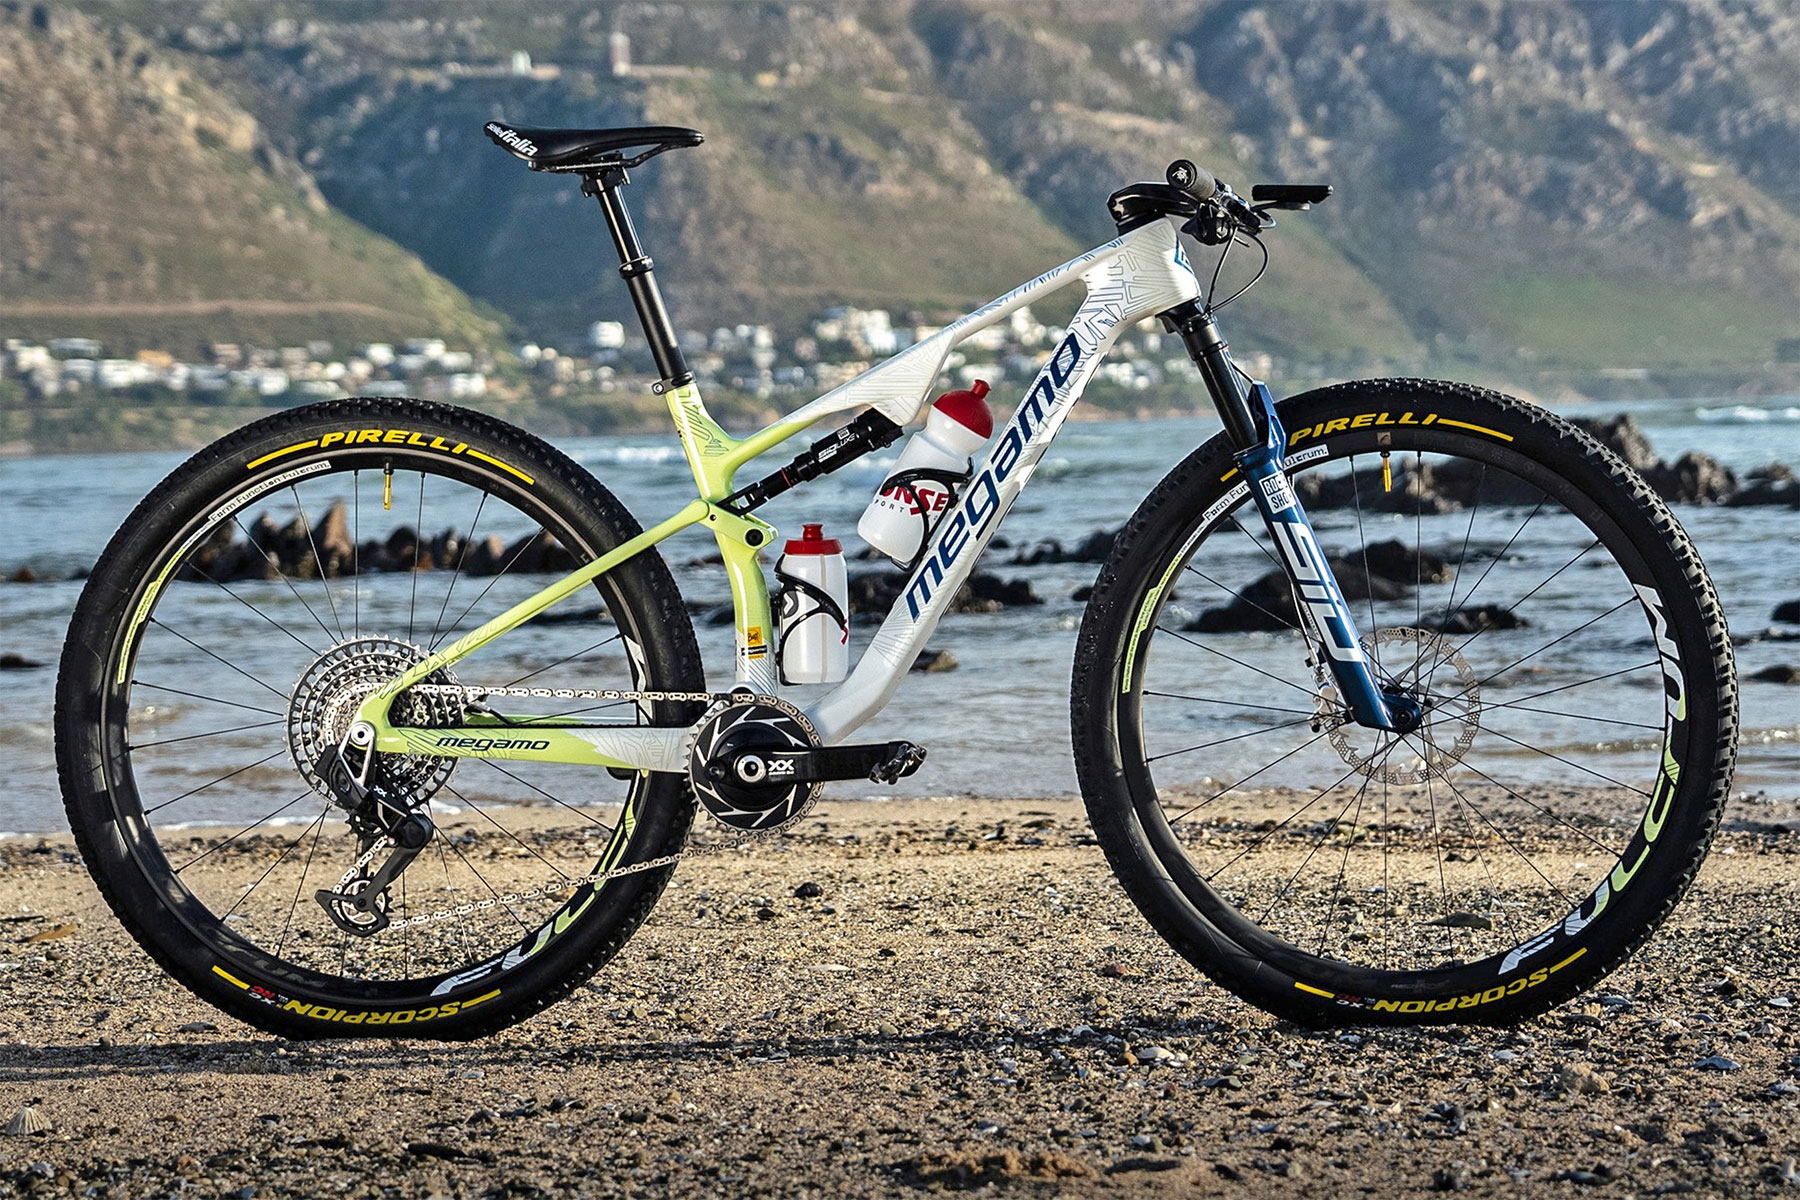 Compra la Megamo Track de Buff, bicicleta Cape Epic XC de edición limitada de 120 mm ganadora de la etapa 1